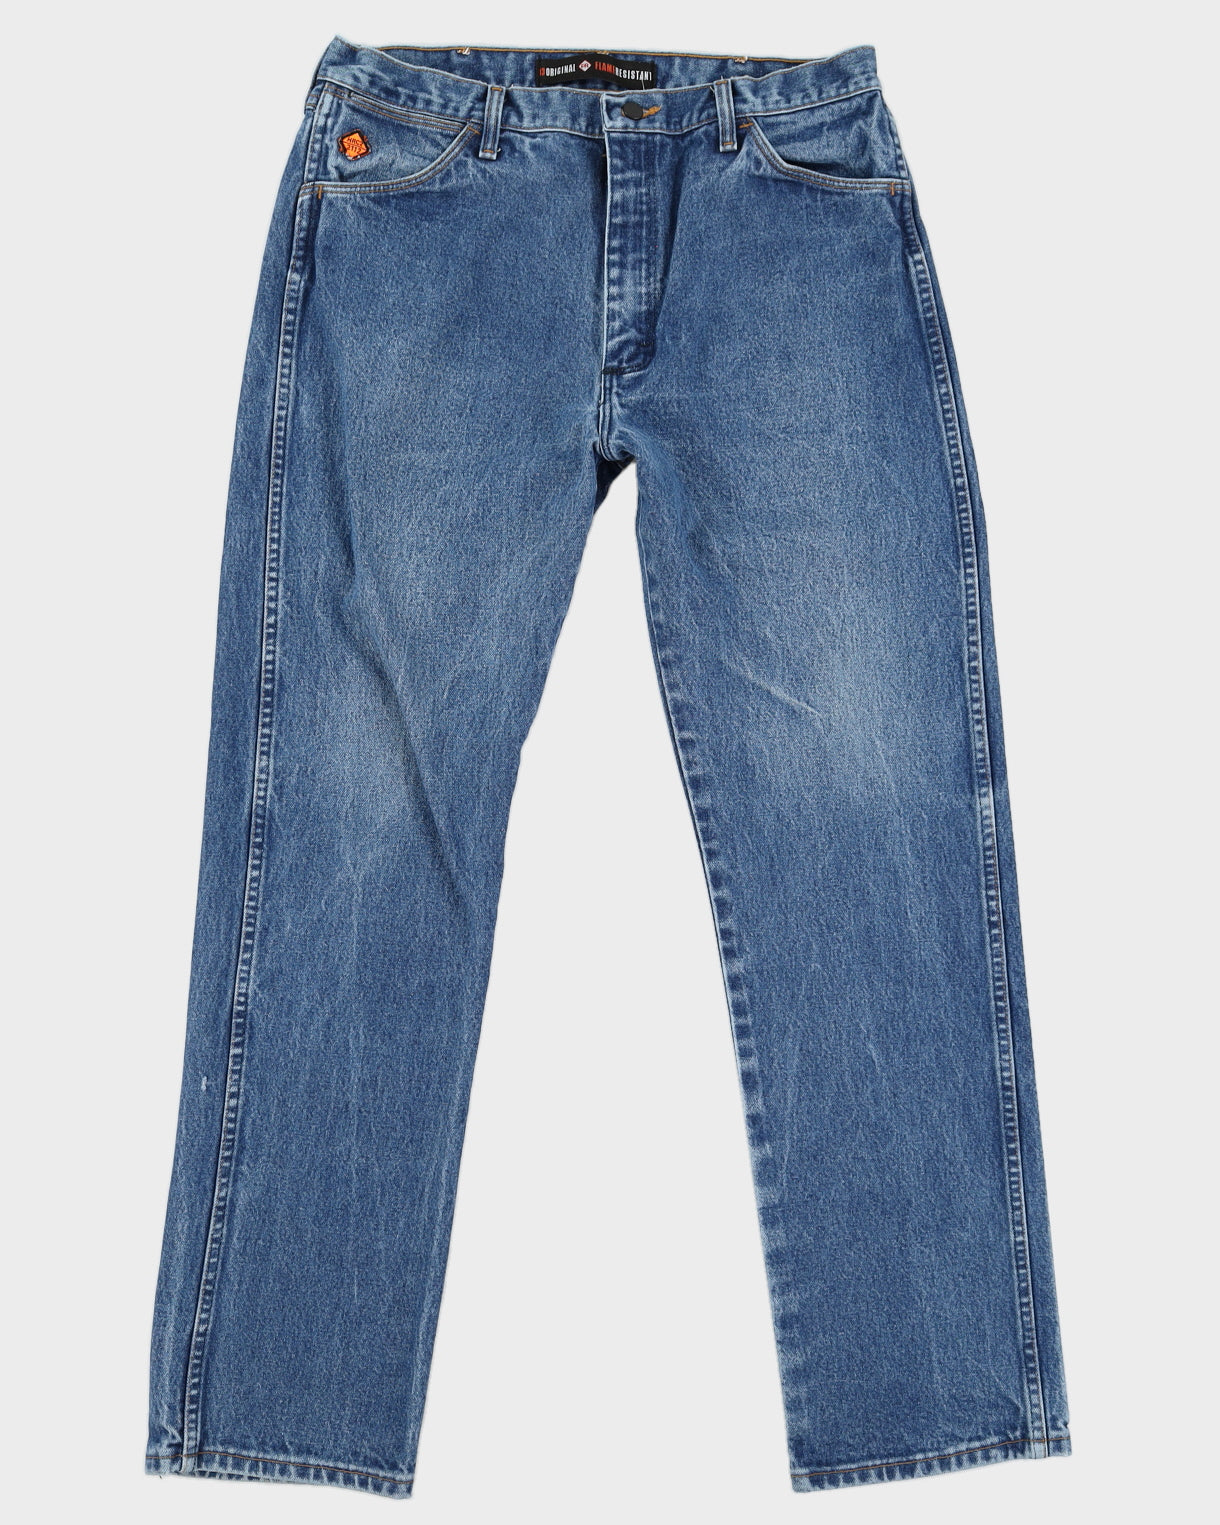 Vintage 00s Wrangler Medium Wash Flame Resistant Denim Jeans - W36 L34